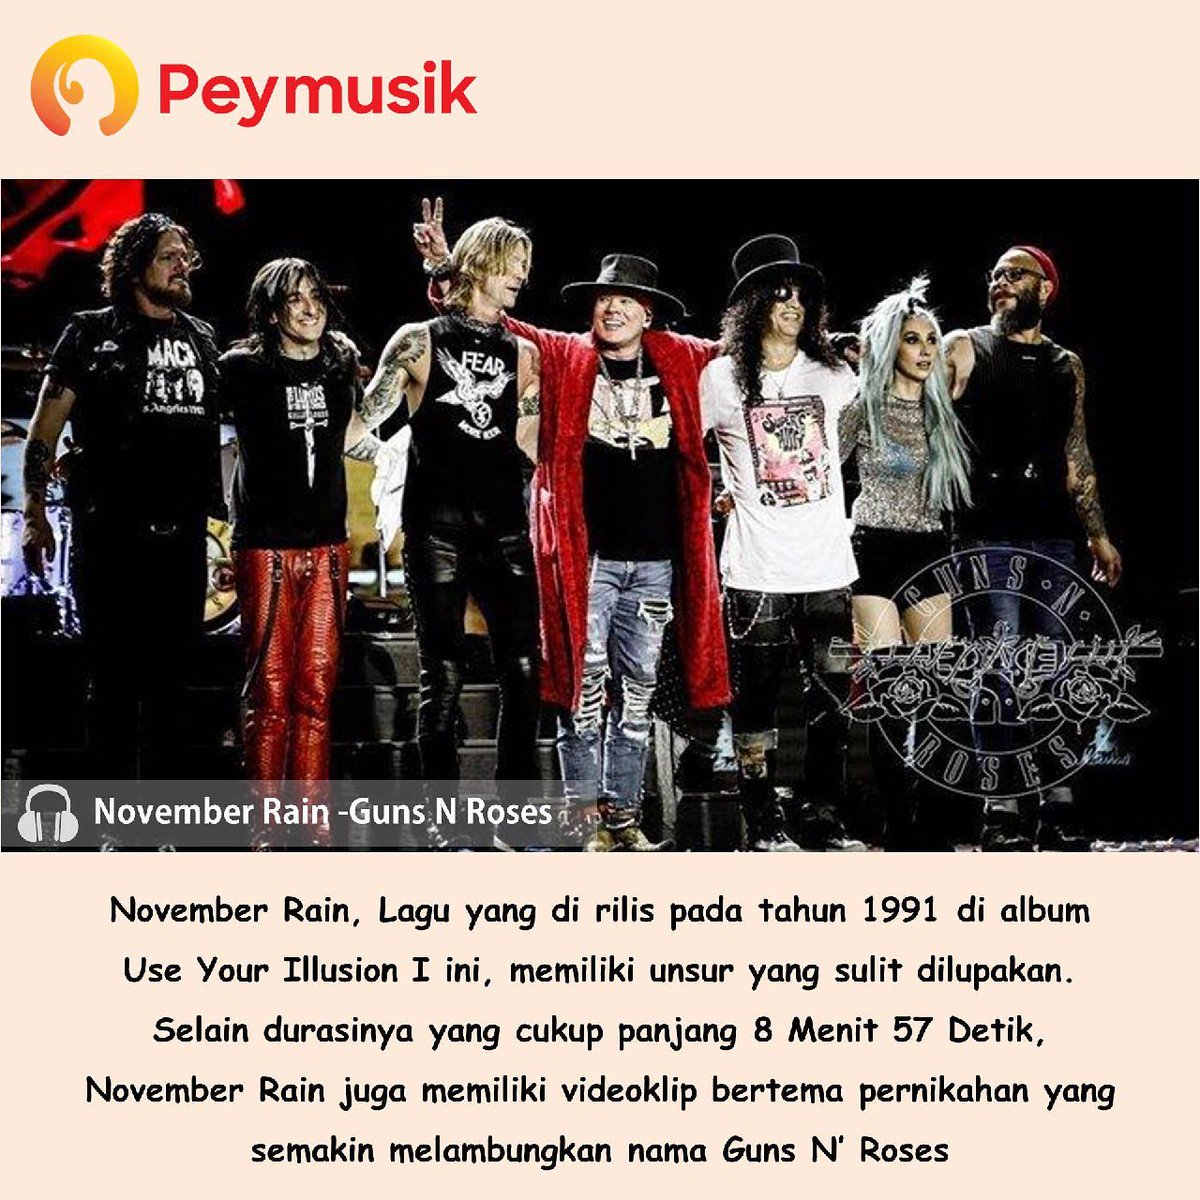 Musim hujan gini, ternyata banyak yang puterin lagu November Rain-Guns N' Roses  lho!!
Kamu termasuk gak??
.
#Peymusik 
#beritamusik  #musikindonesia 
#hariinovasi
#Mendidikbangsa 
#indonesia